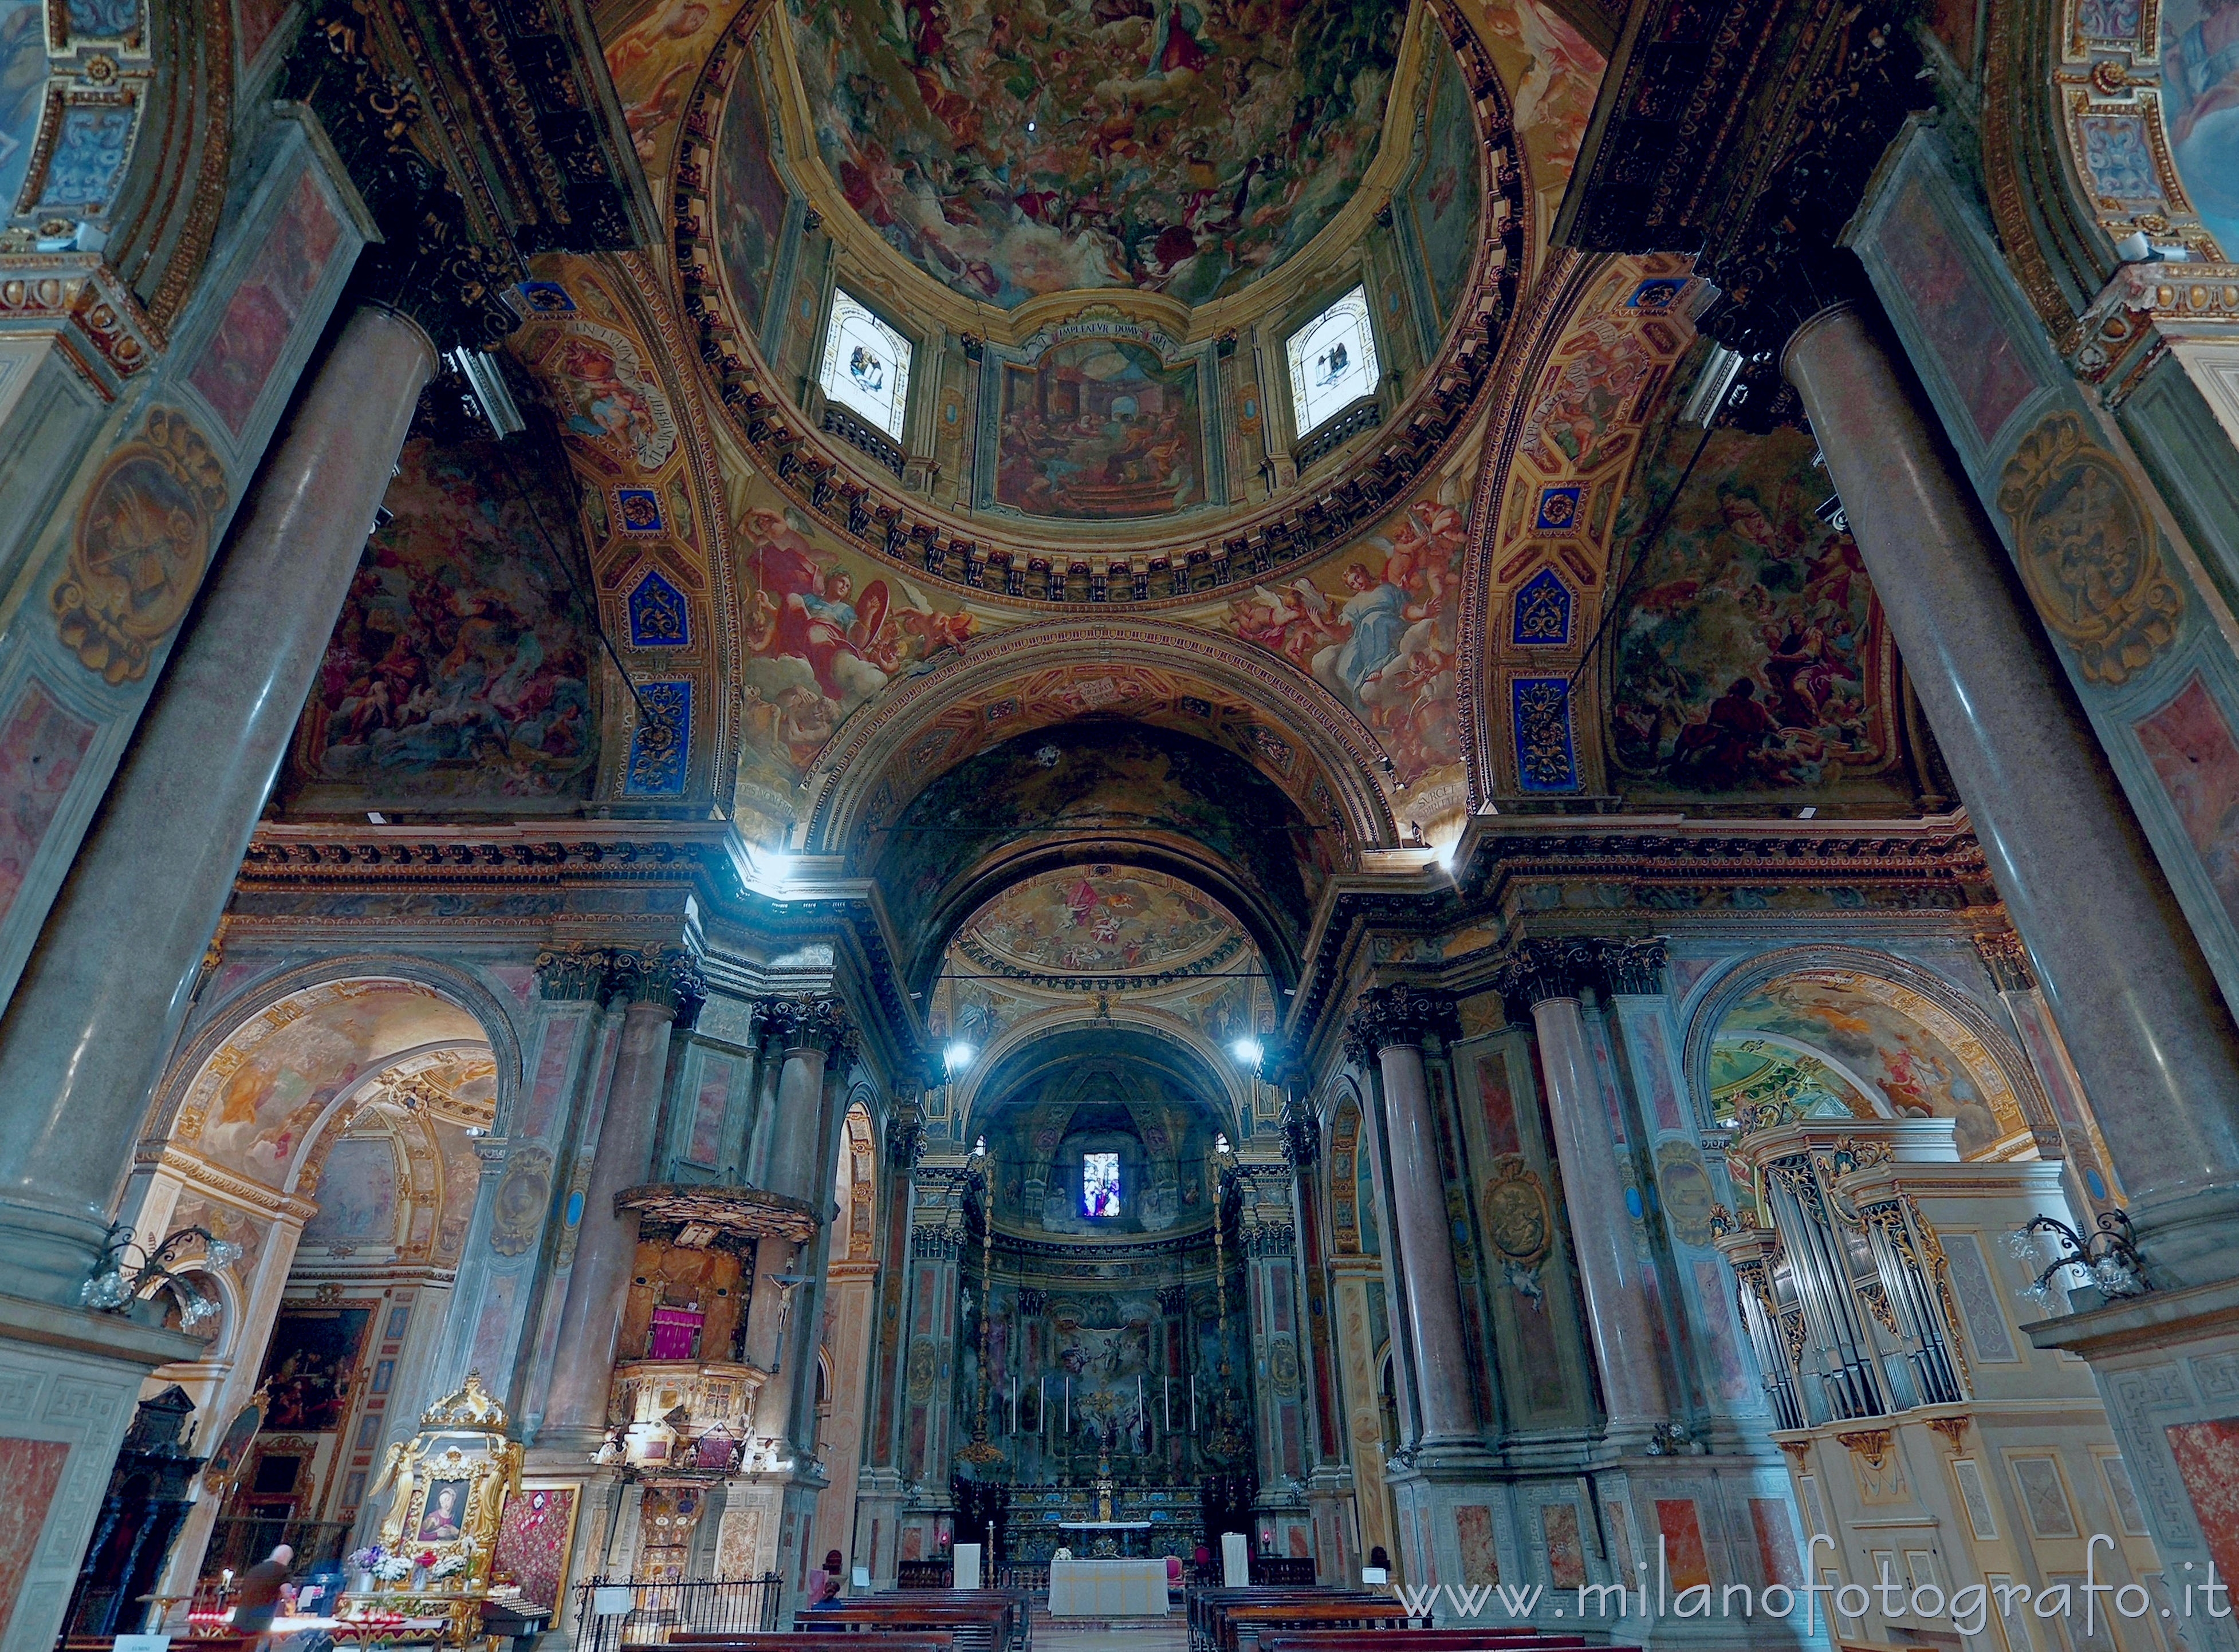 Milan (Italy): Central body of the Church Sant'Alessandro in Zebedia - Milan (Italy)